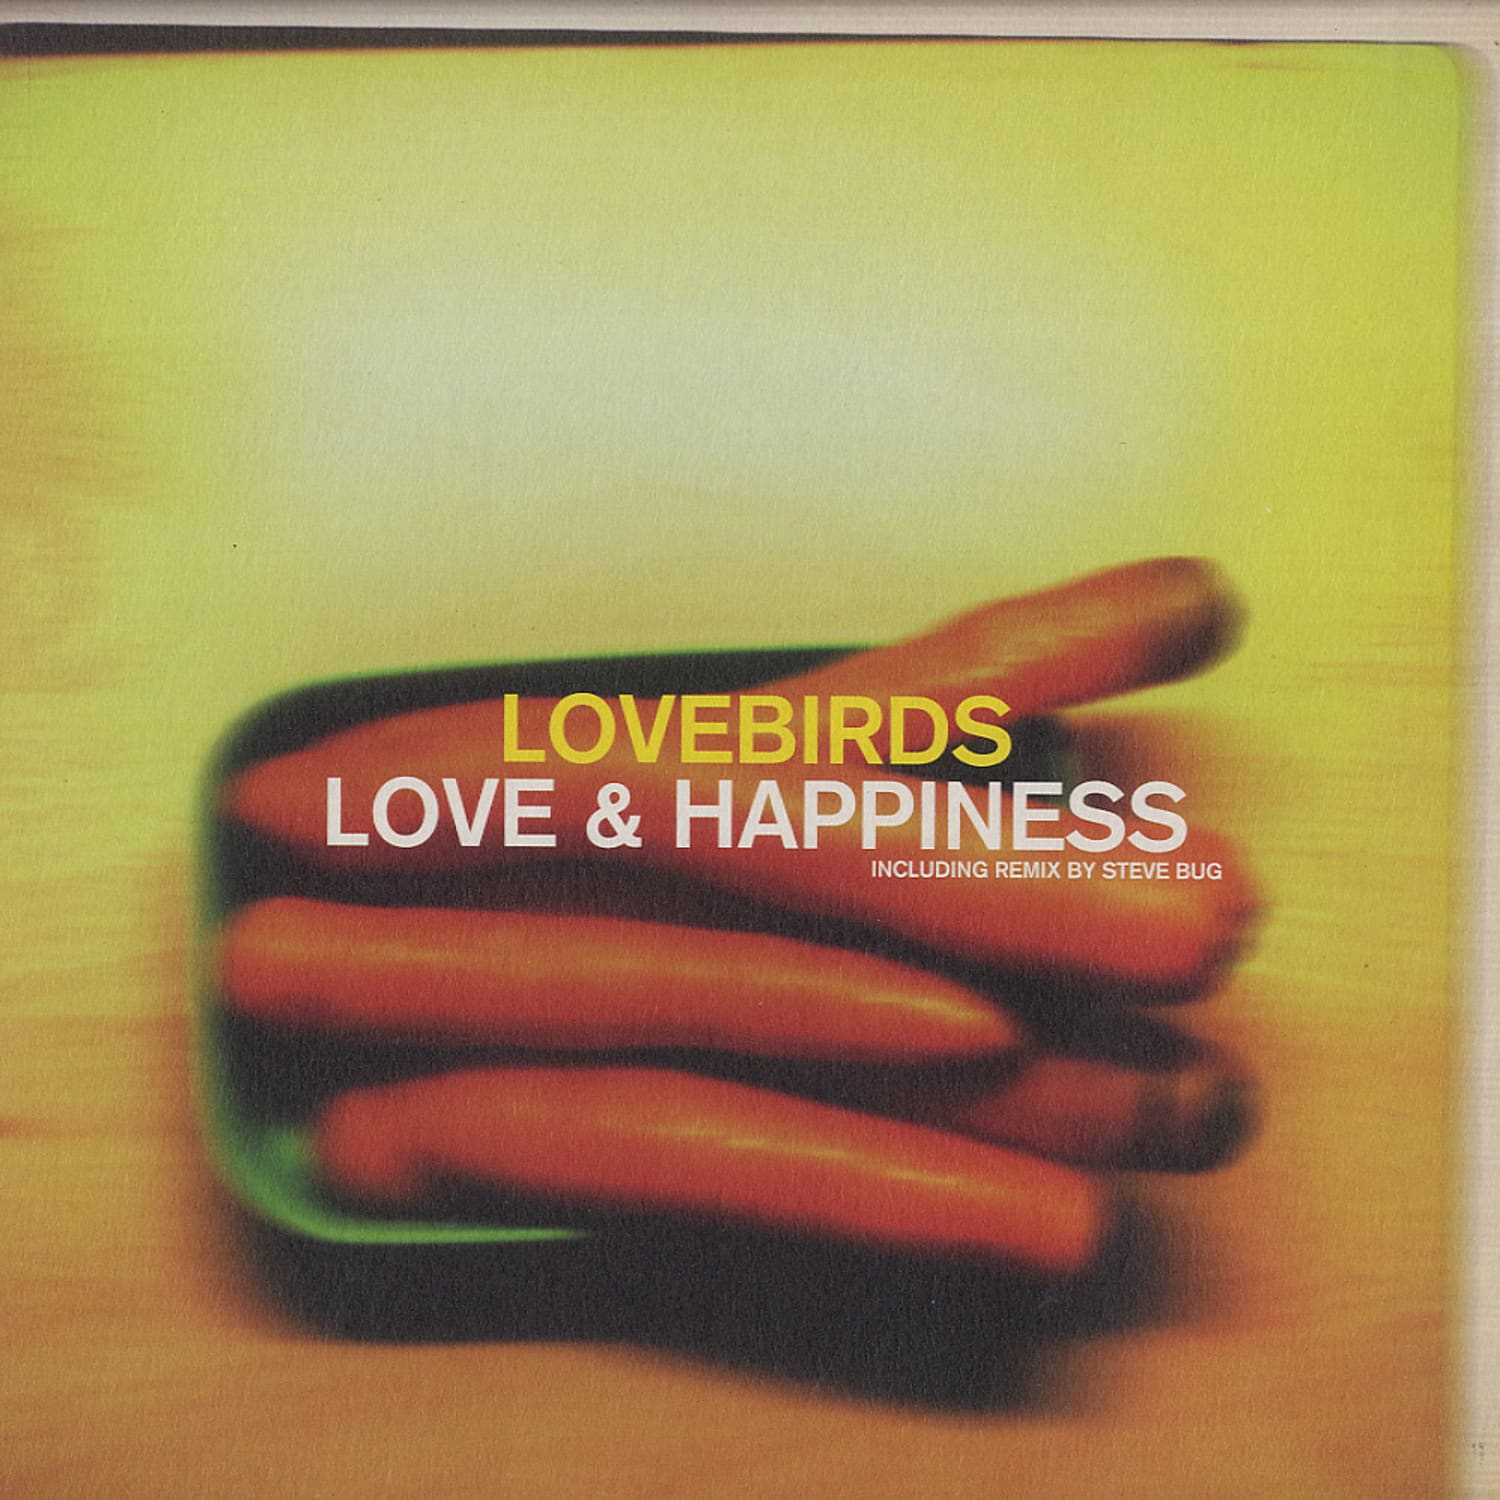 Lovebirds - LOVE & HAPPINESS / STEVE BUG REMIX